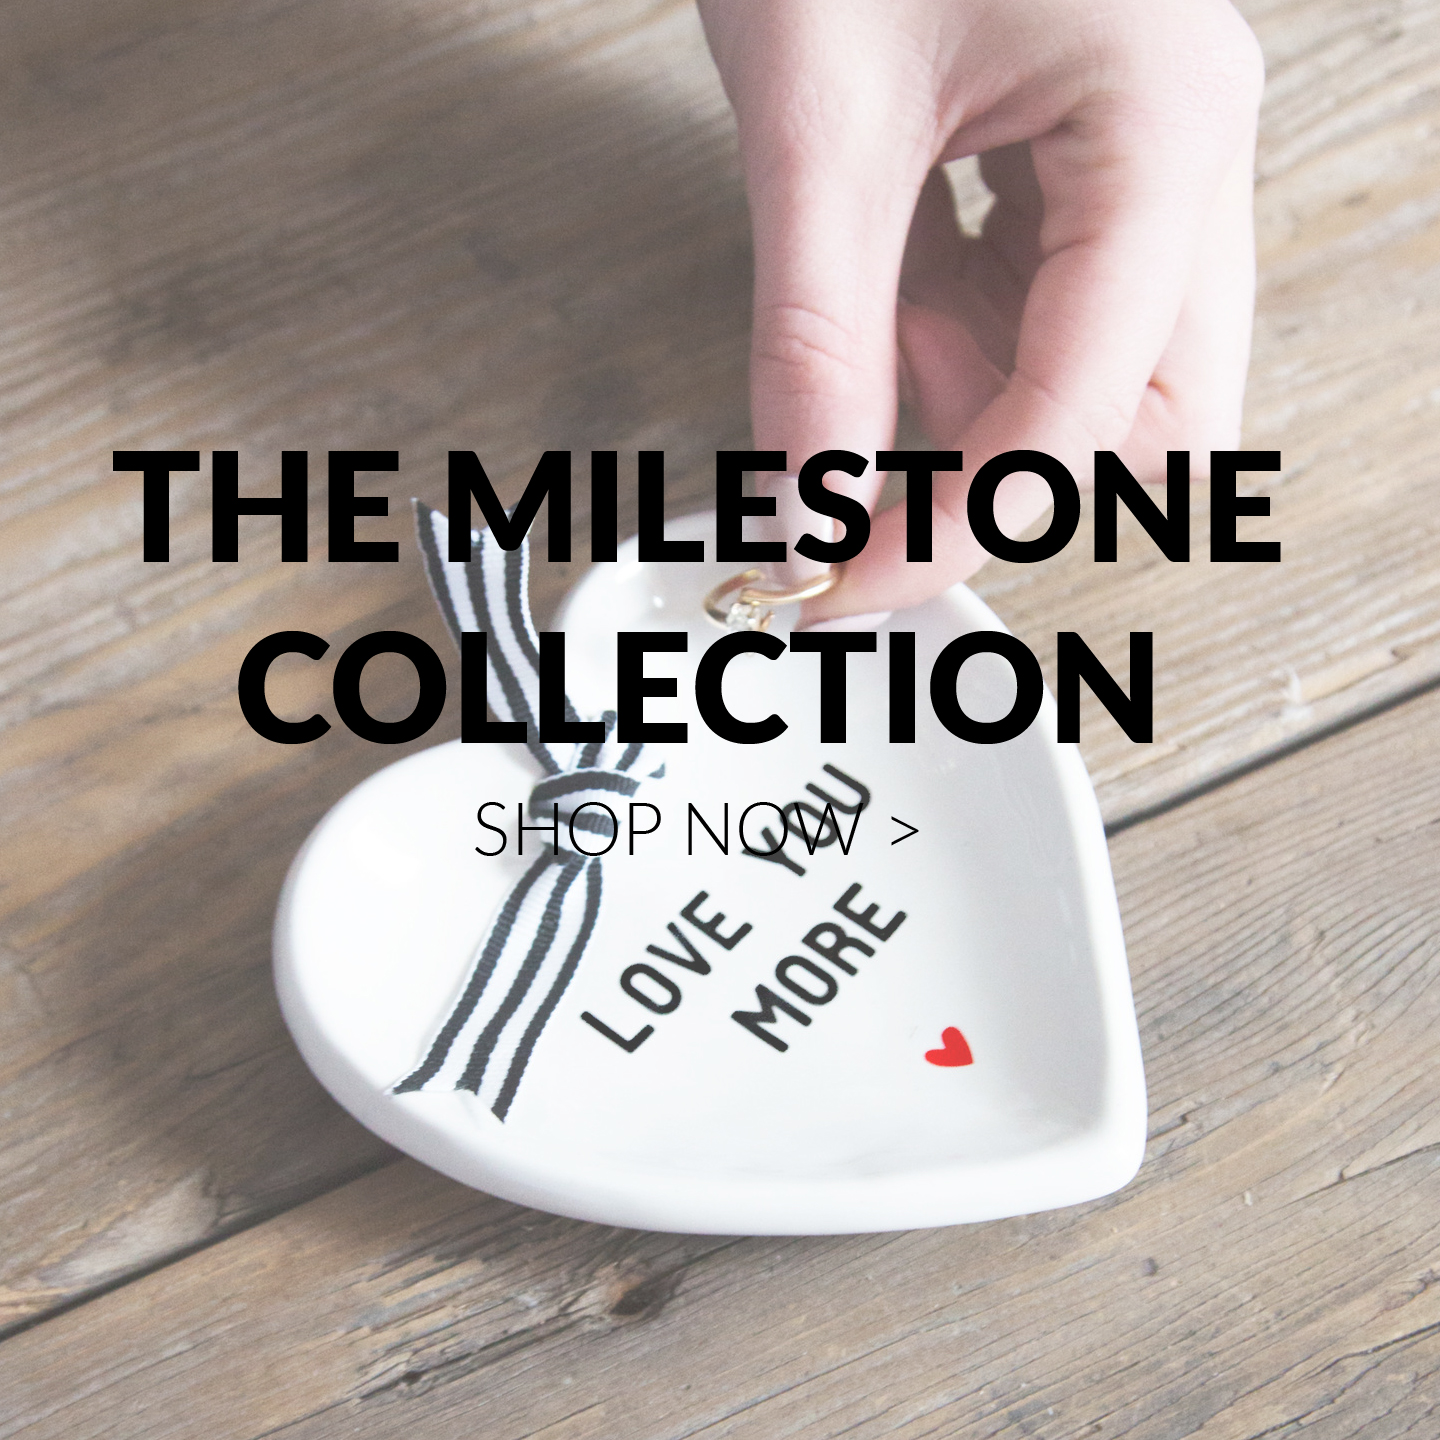 The Milestone Collection